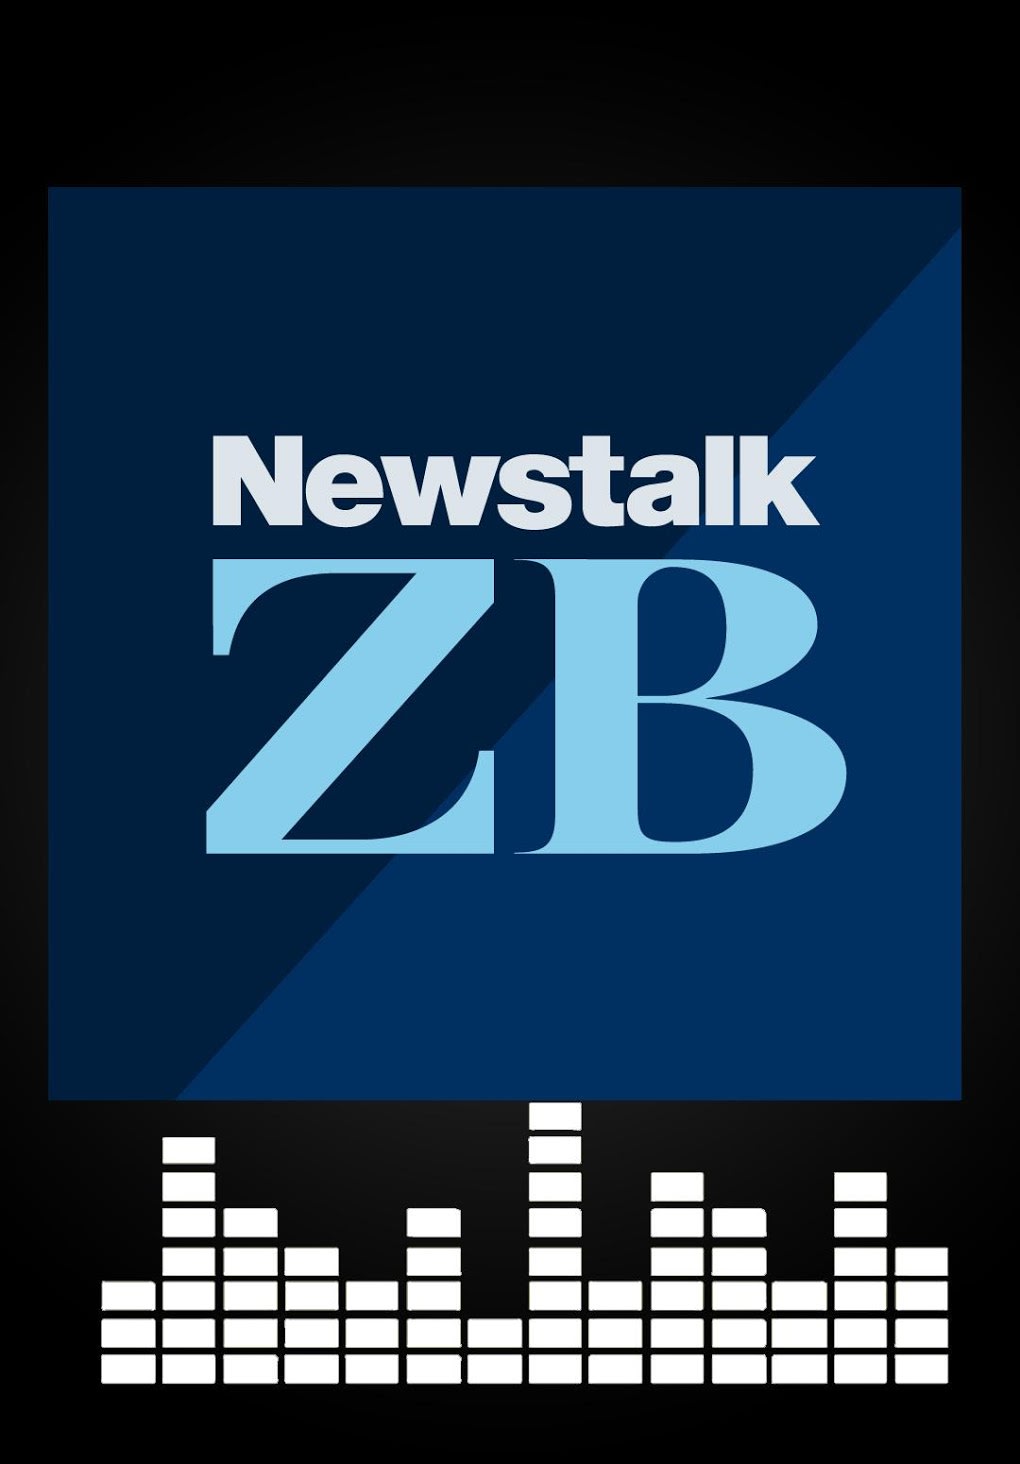 Newstalk ZB Auckland Radio Live 247 para Android - Download